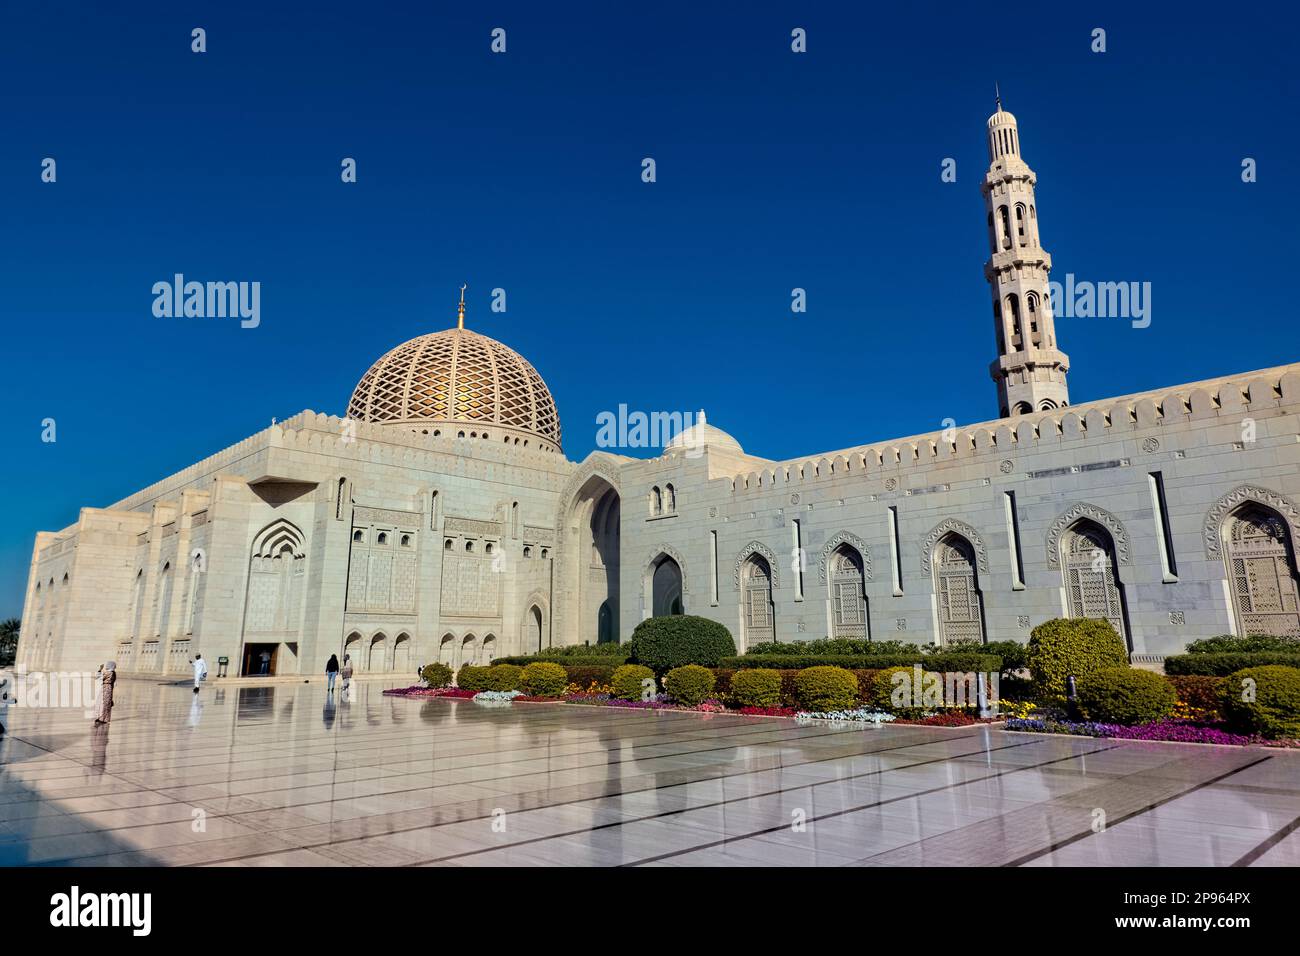 The impressive Sultan Qaboos Grand Mosque, Muscat, Oman Stock Photo